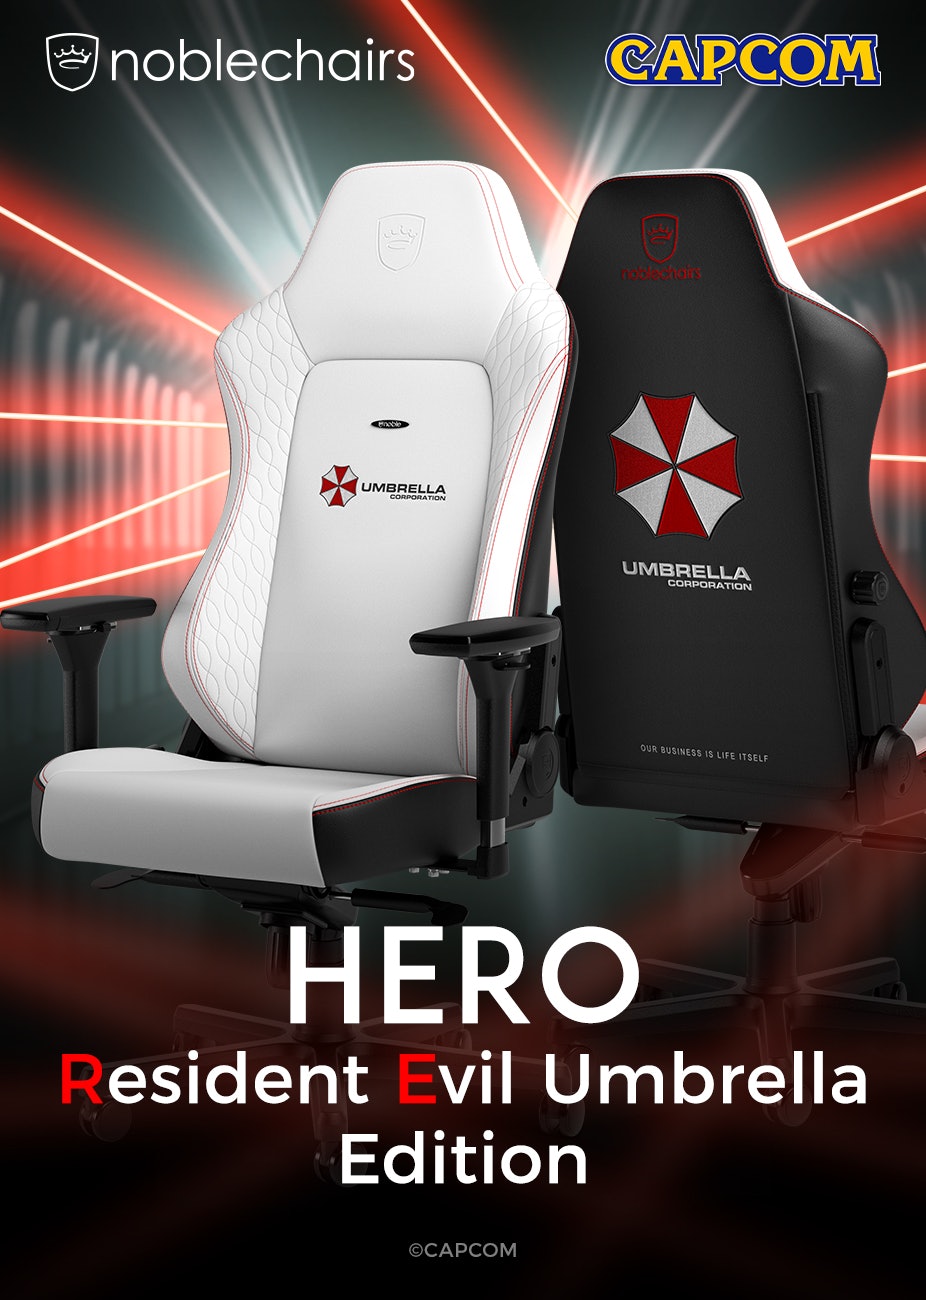 Cadeira noblechairs HERO - Resident Evil Umbrella Edition